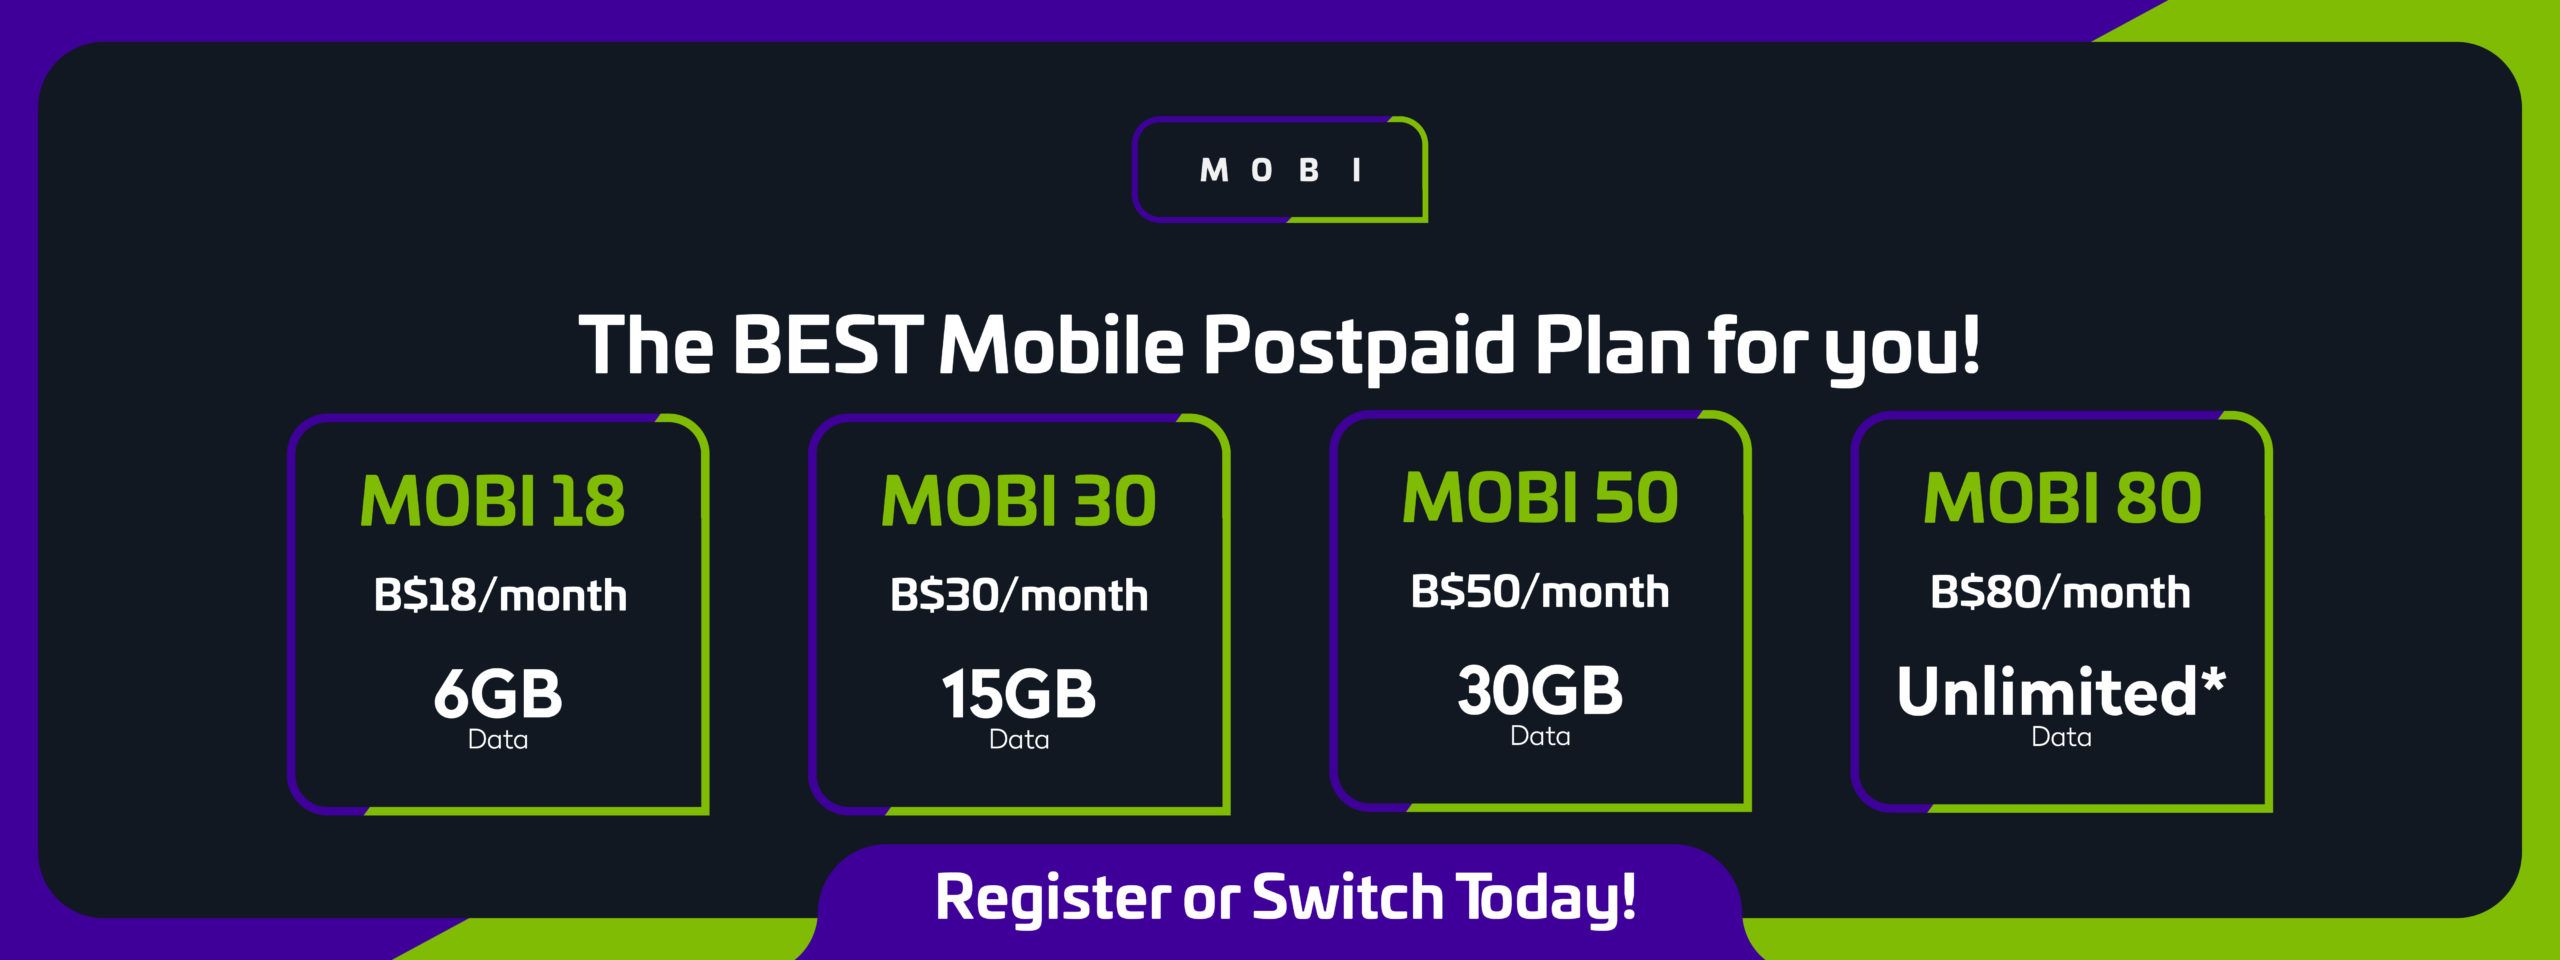 DST Mobi Plans